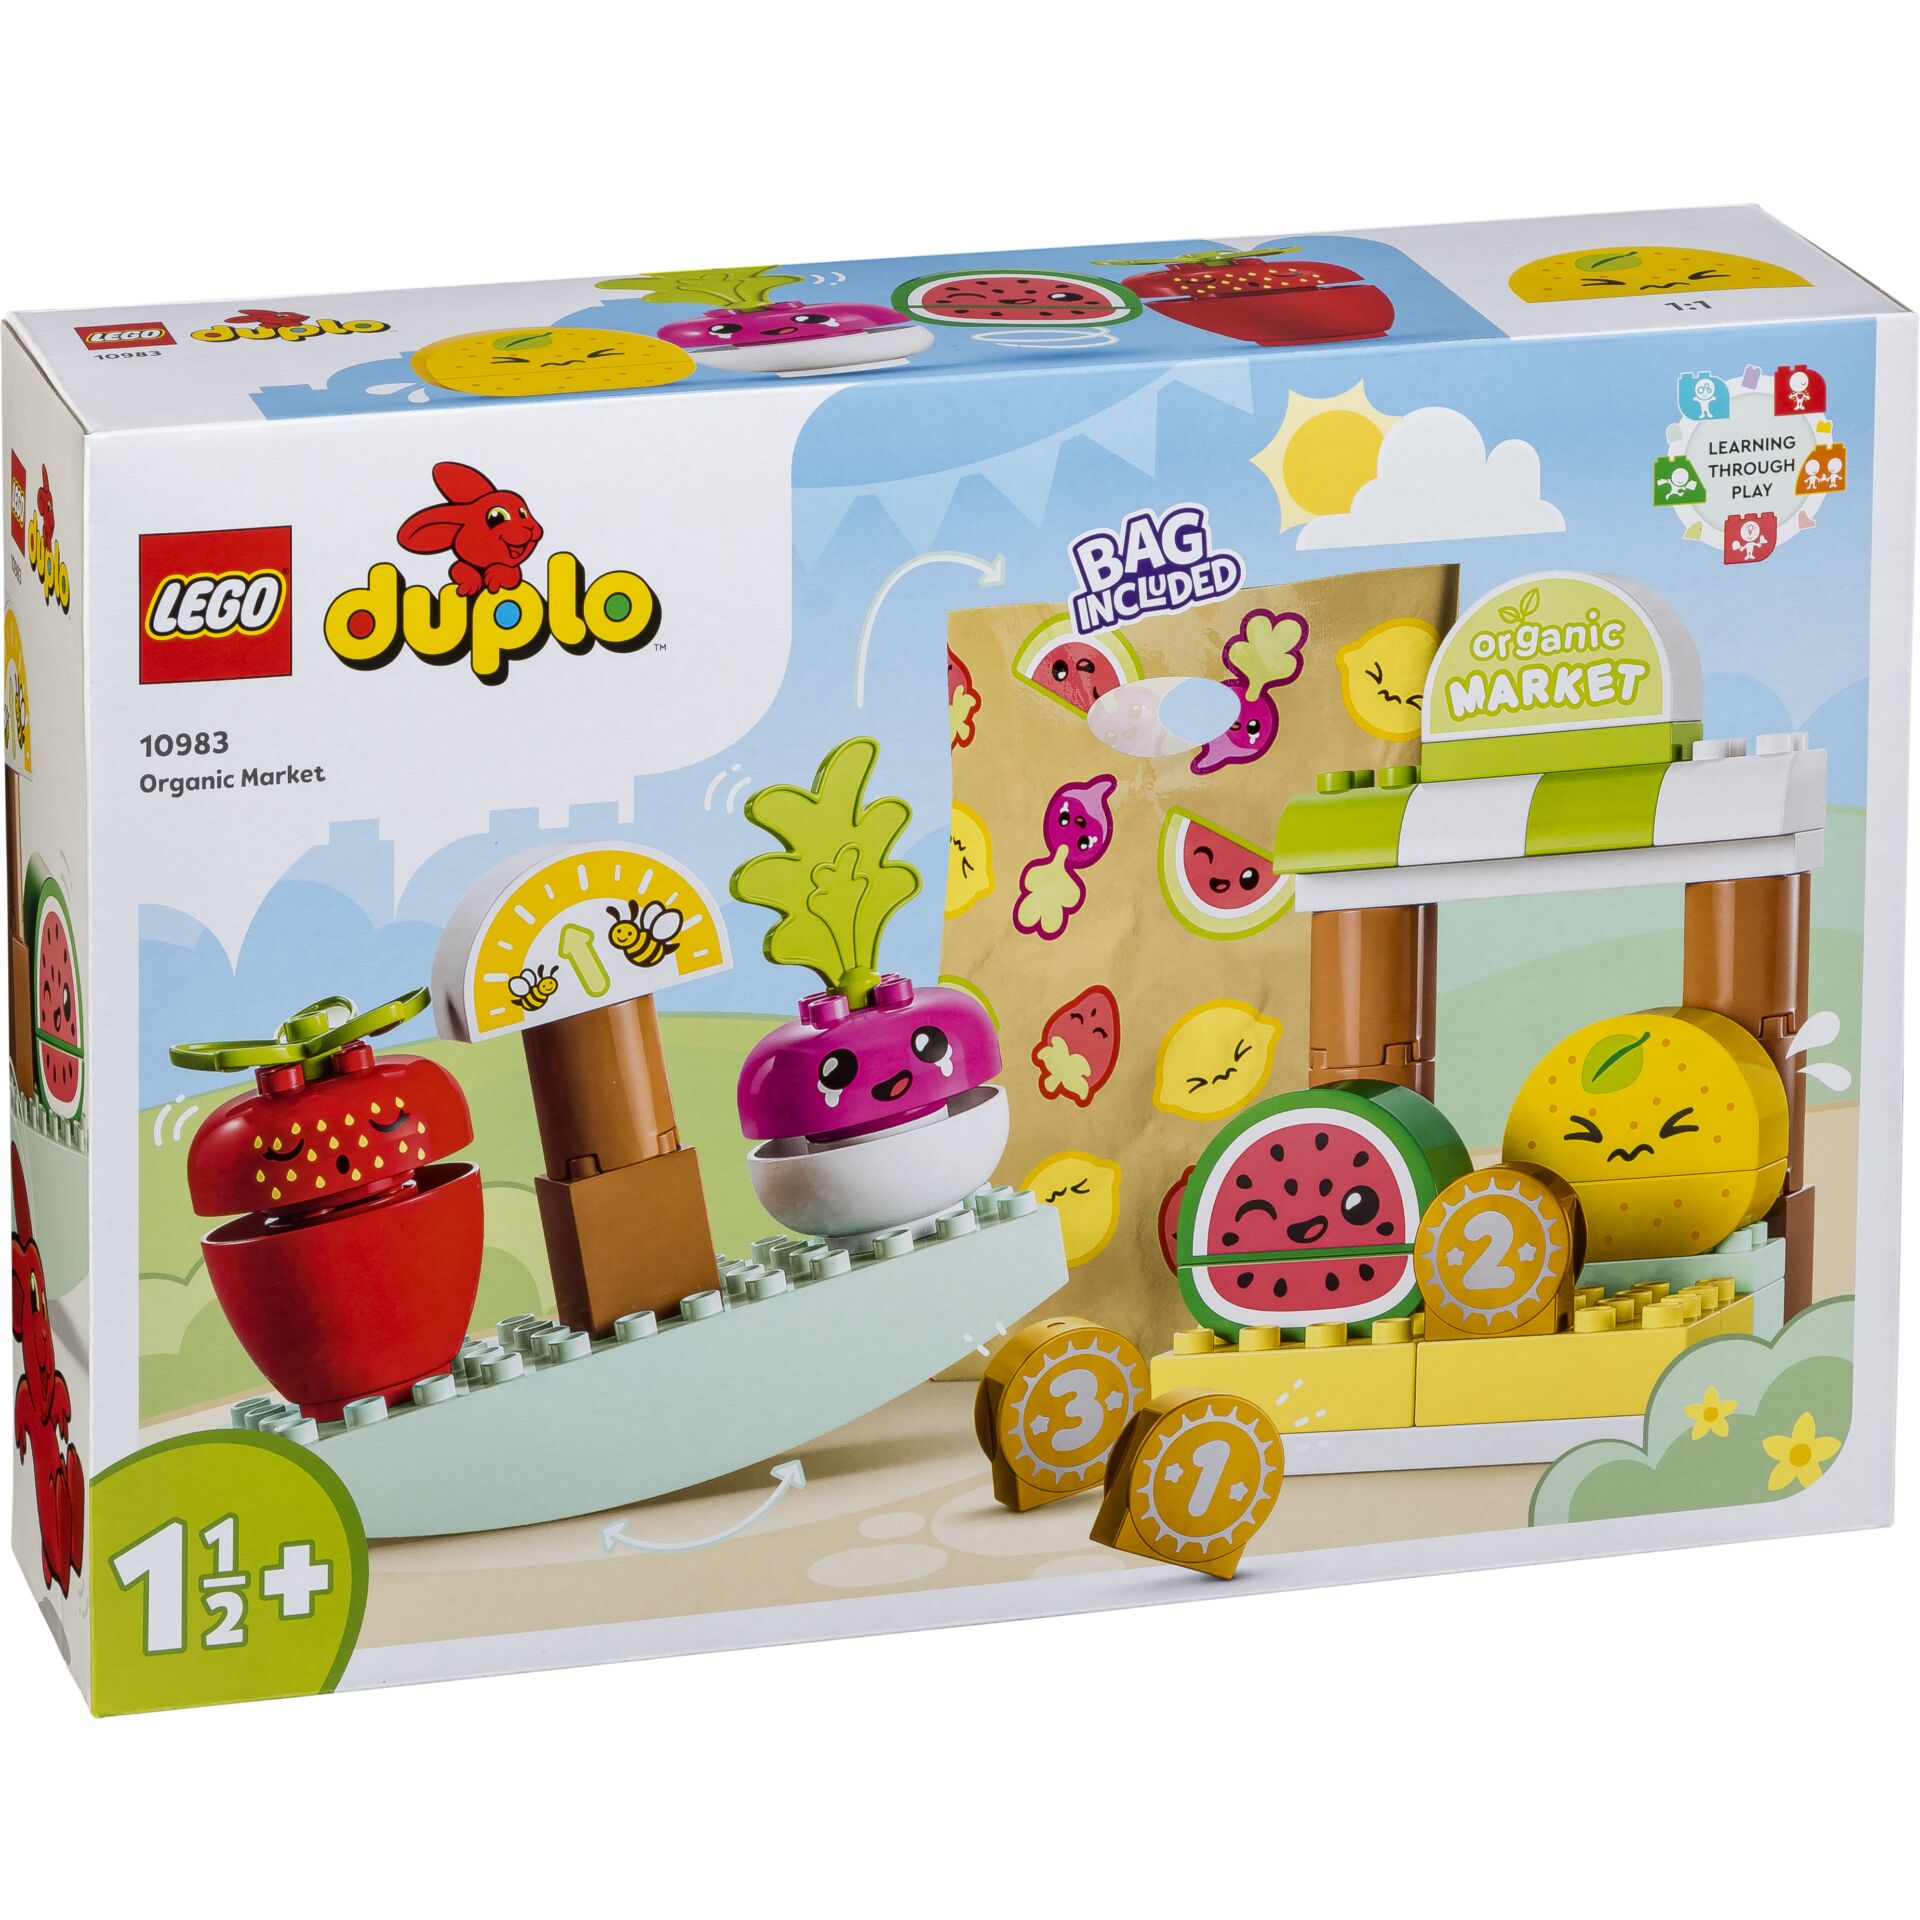 Lego -Konstruktionsspielzeug 10983 DUPLO Biomarkt -Lego Toys/Spielzeug